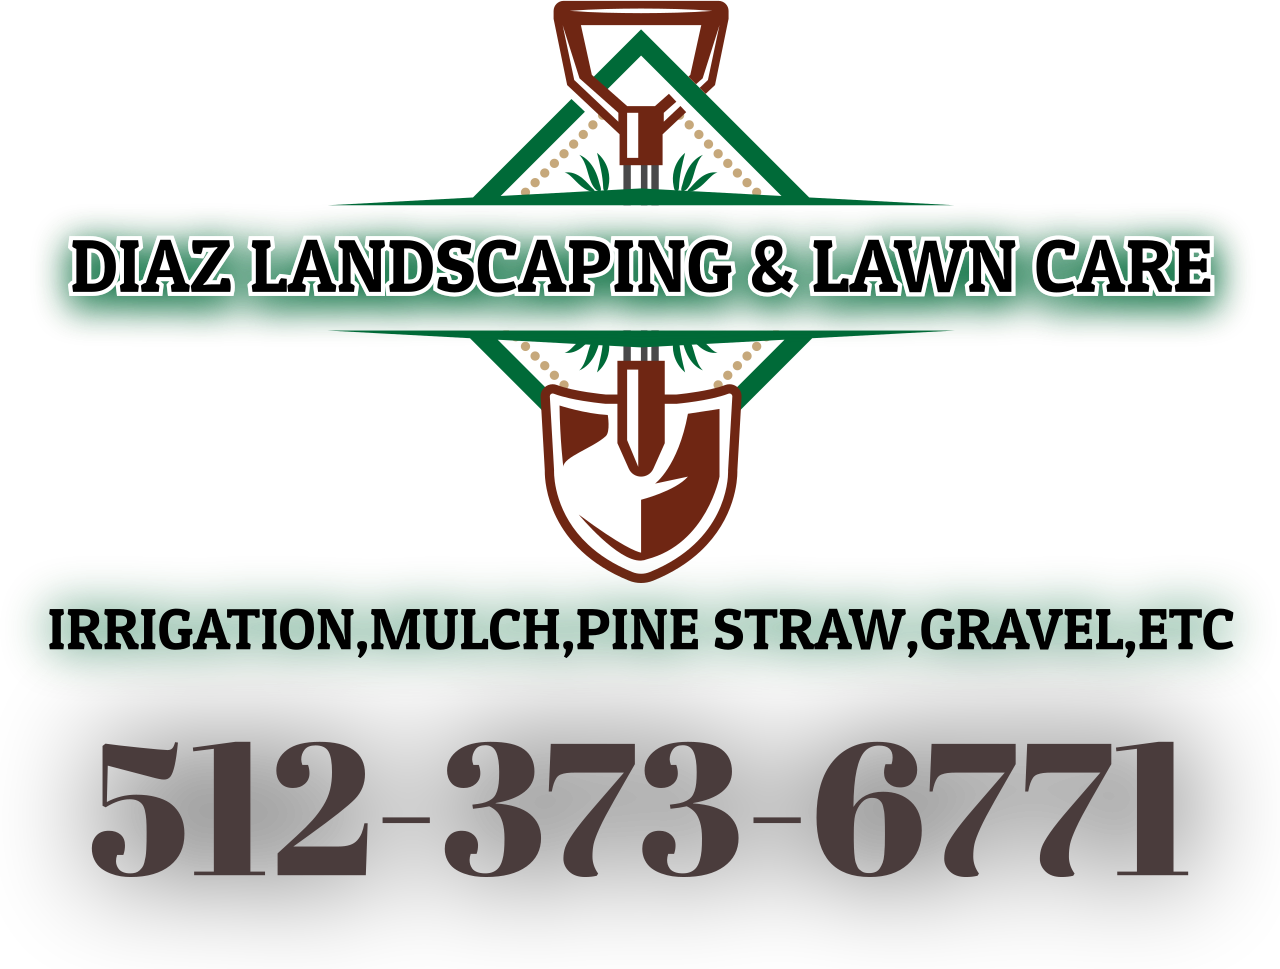 Diaz landscaping & lawn care's logo